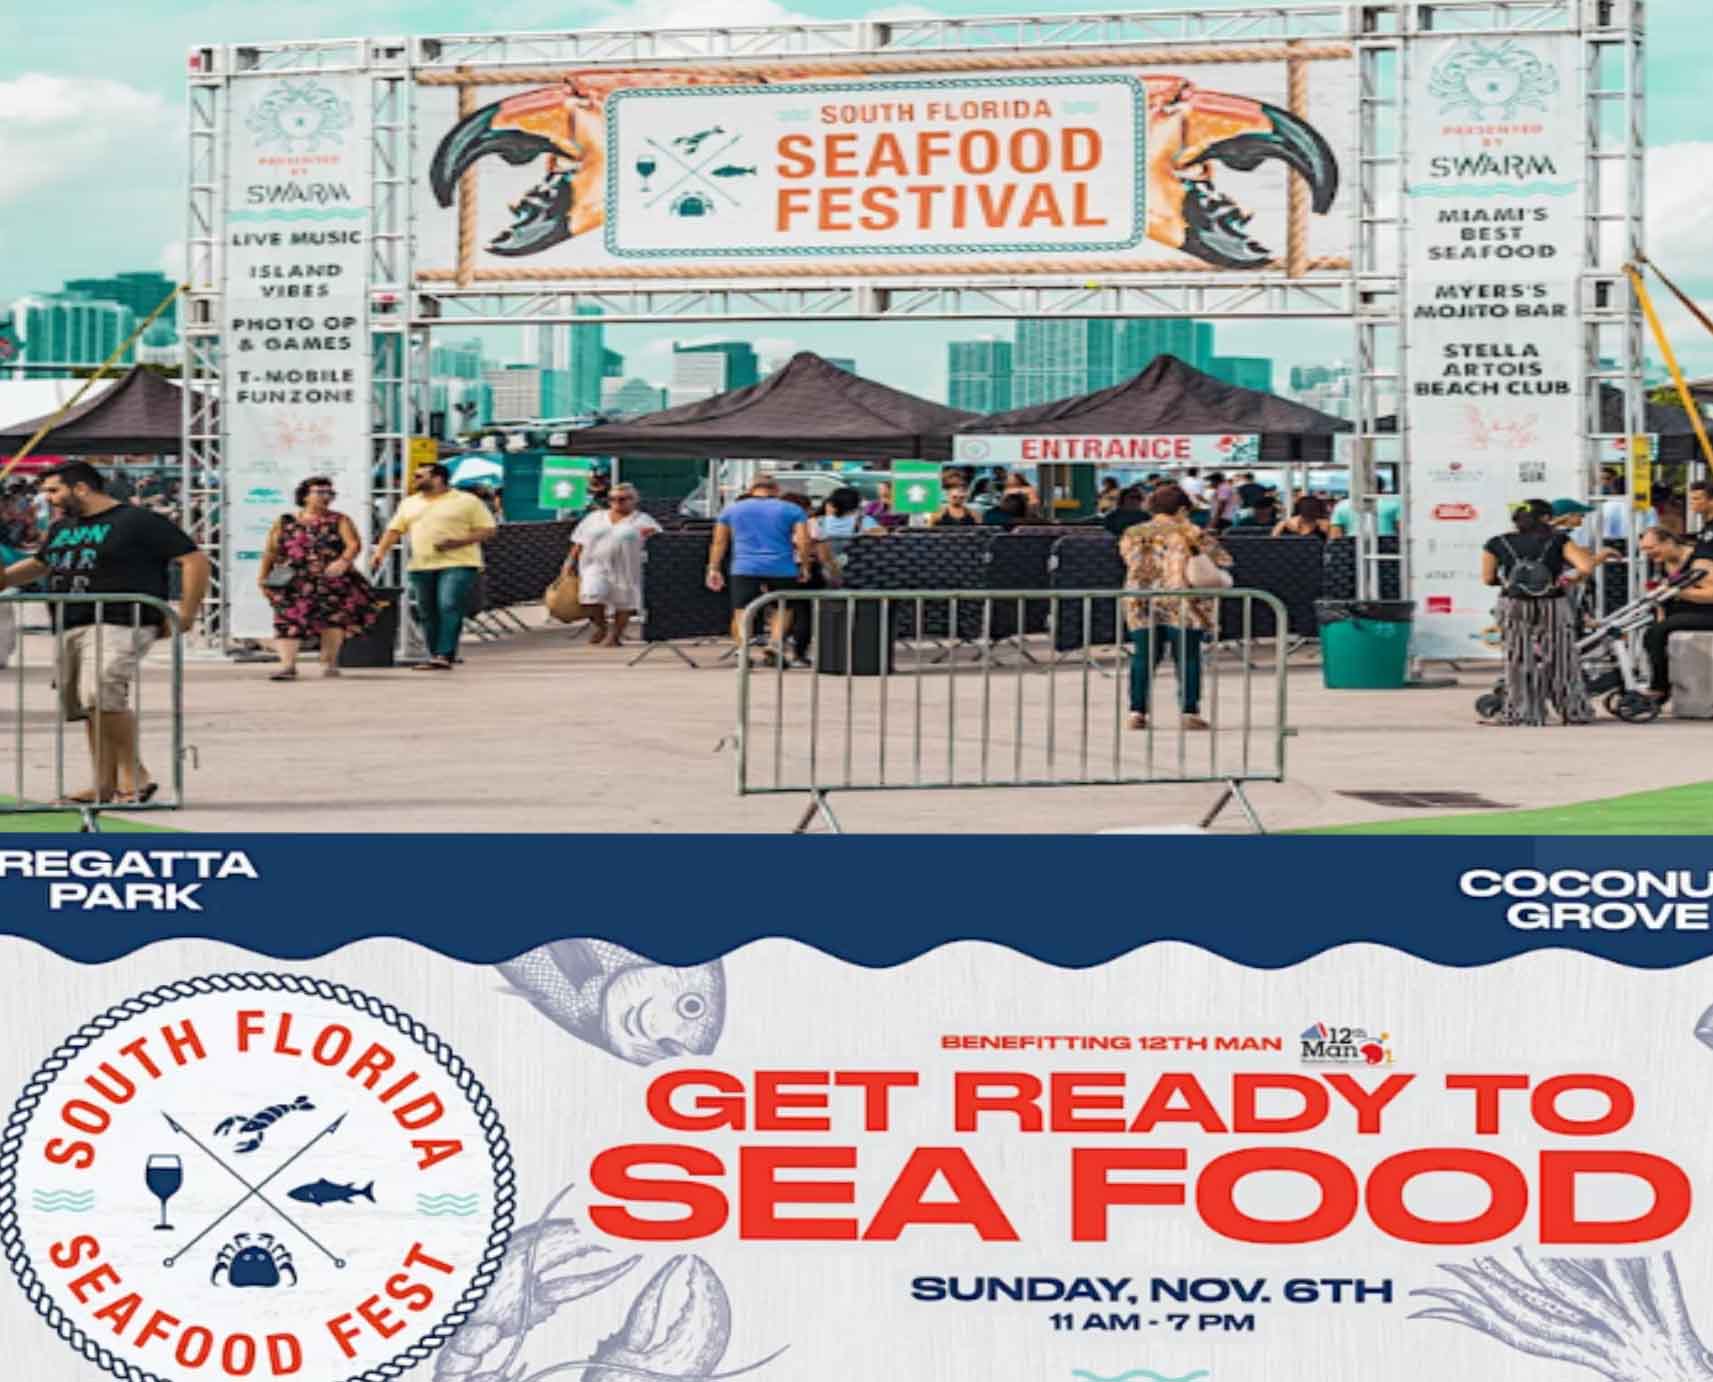 South Florida Seafood Festival 2022 in Coconut Grove's Regatta Park